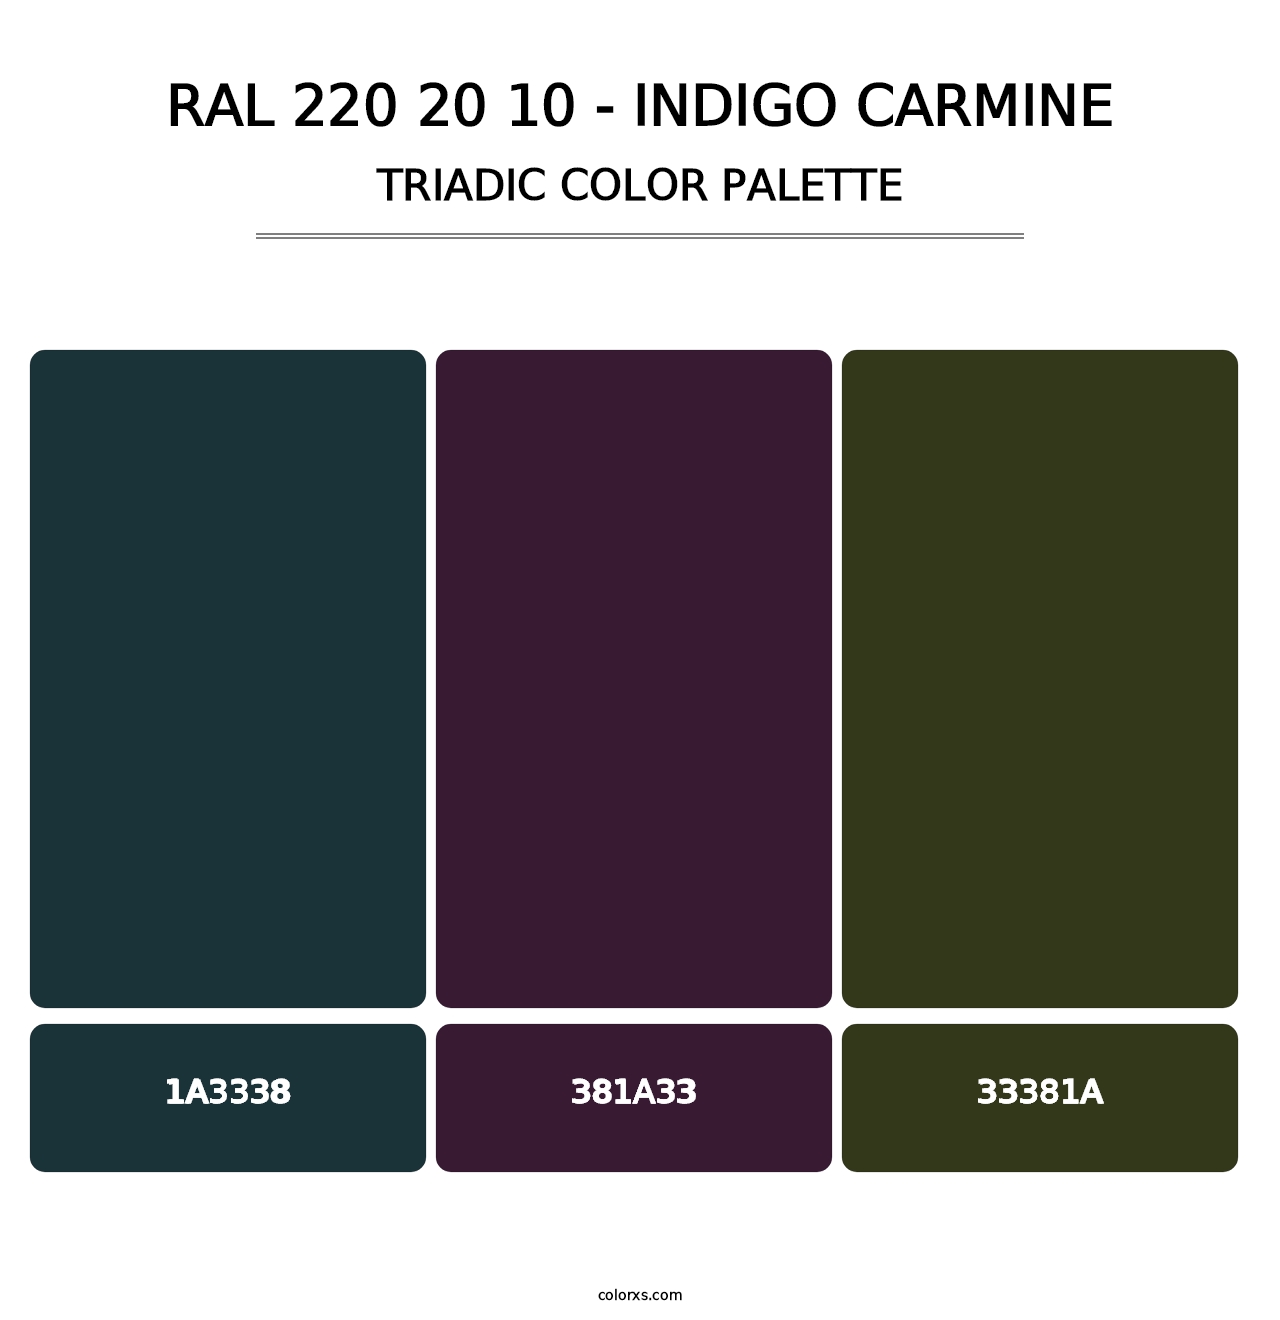 RAL 220 20 10 - Indigo Carmine - Triadic Color Palette